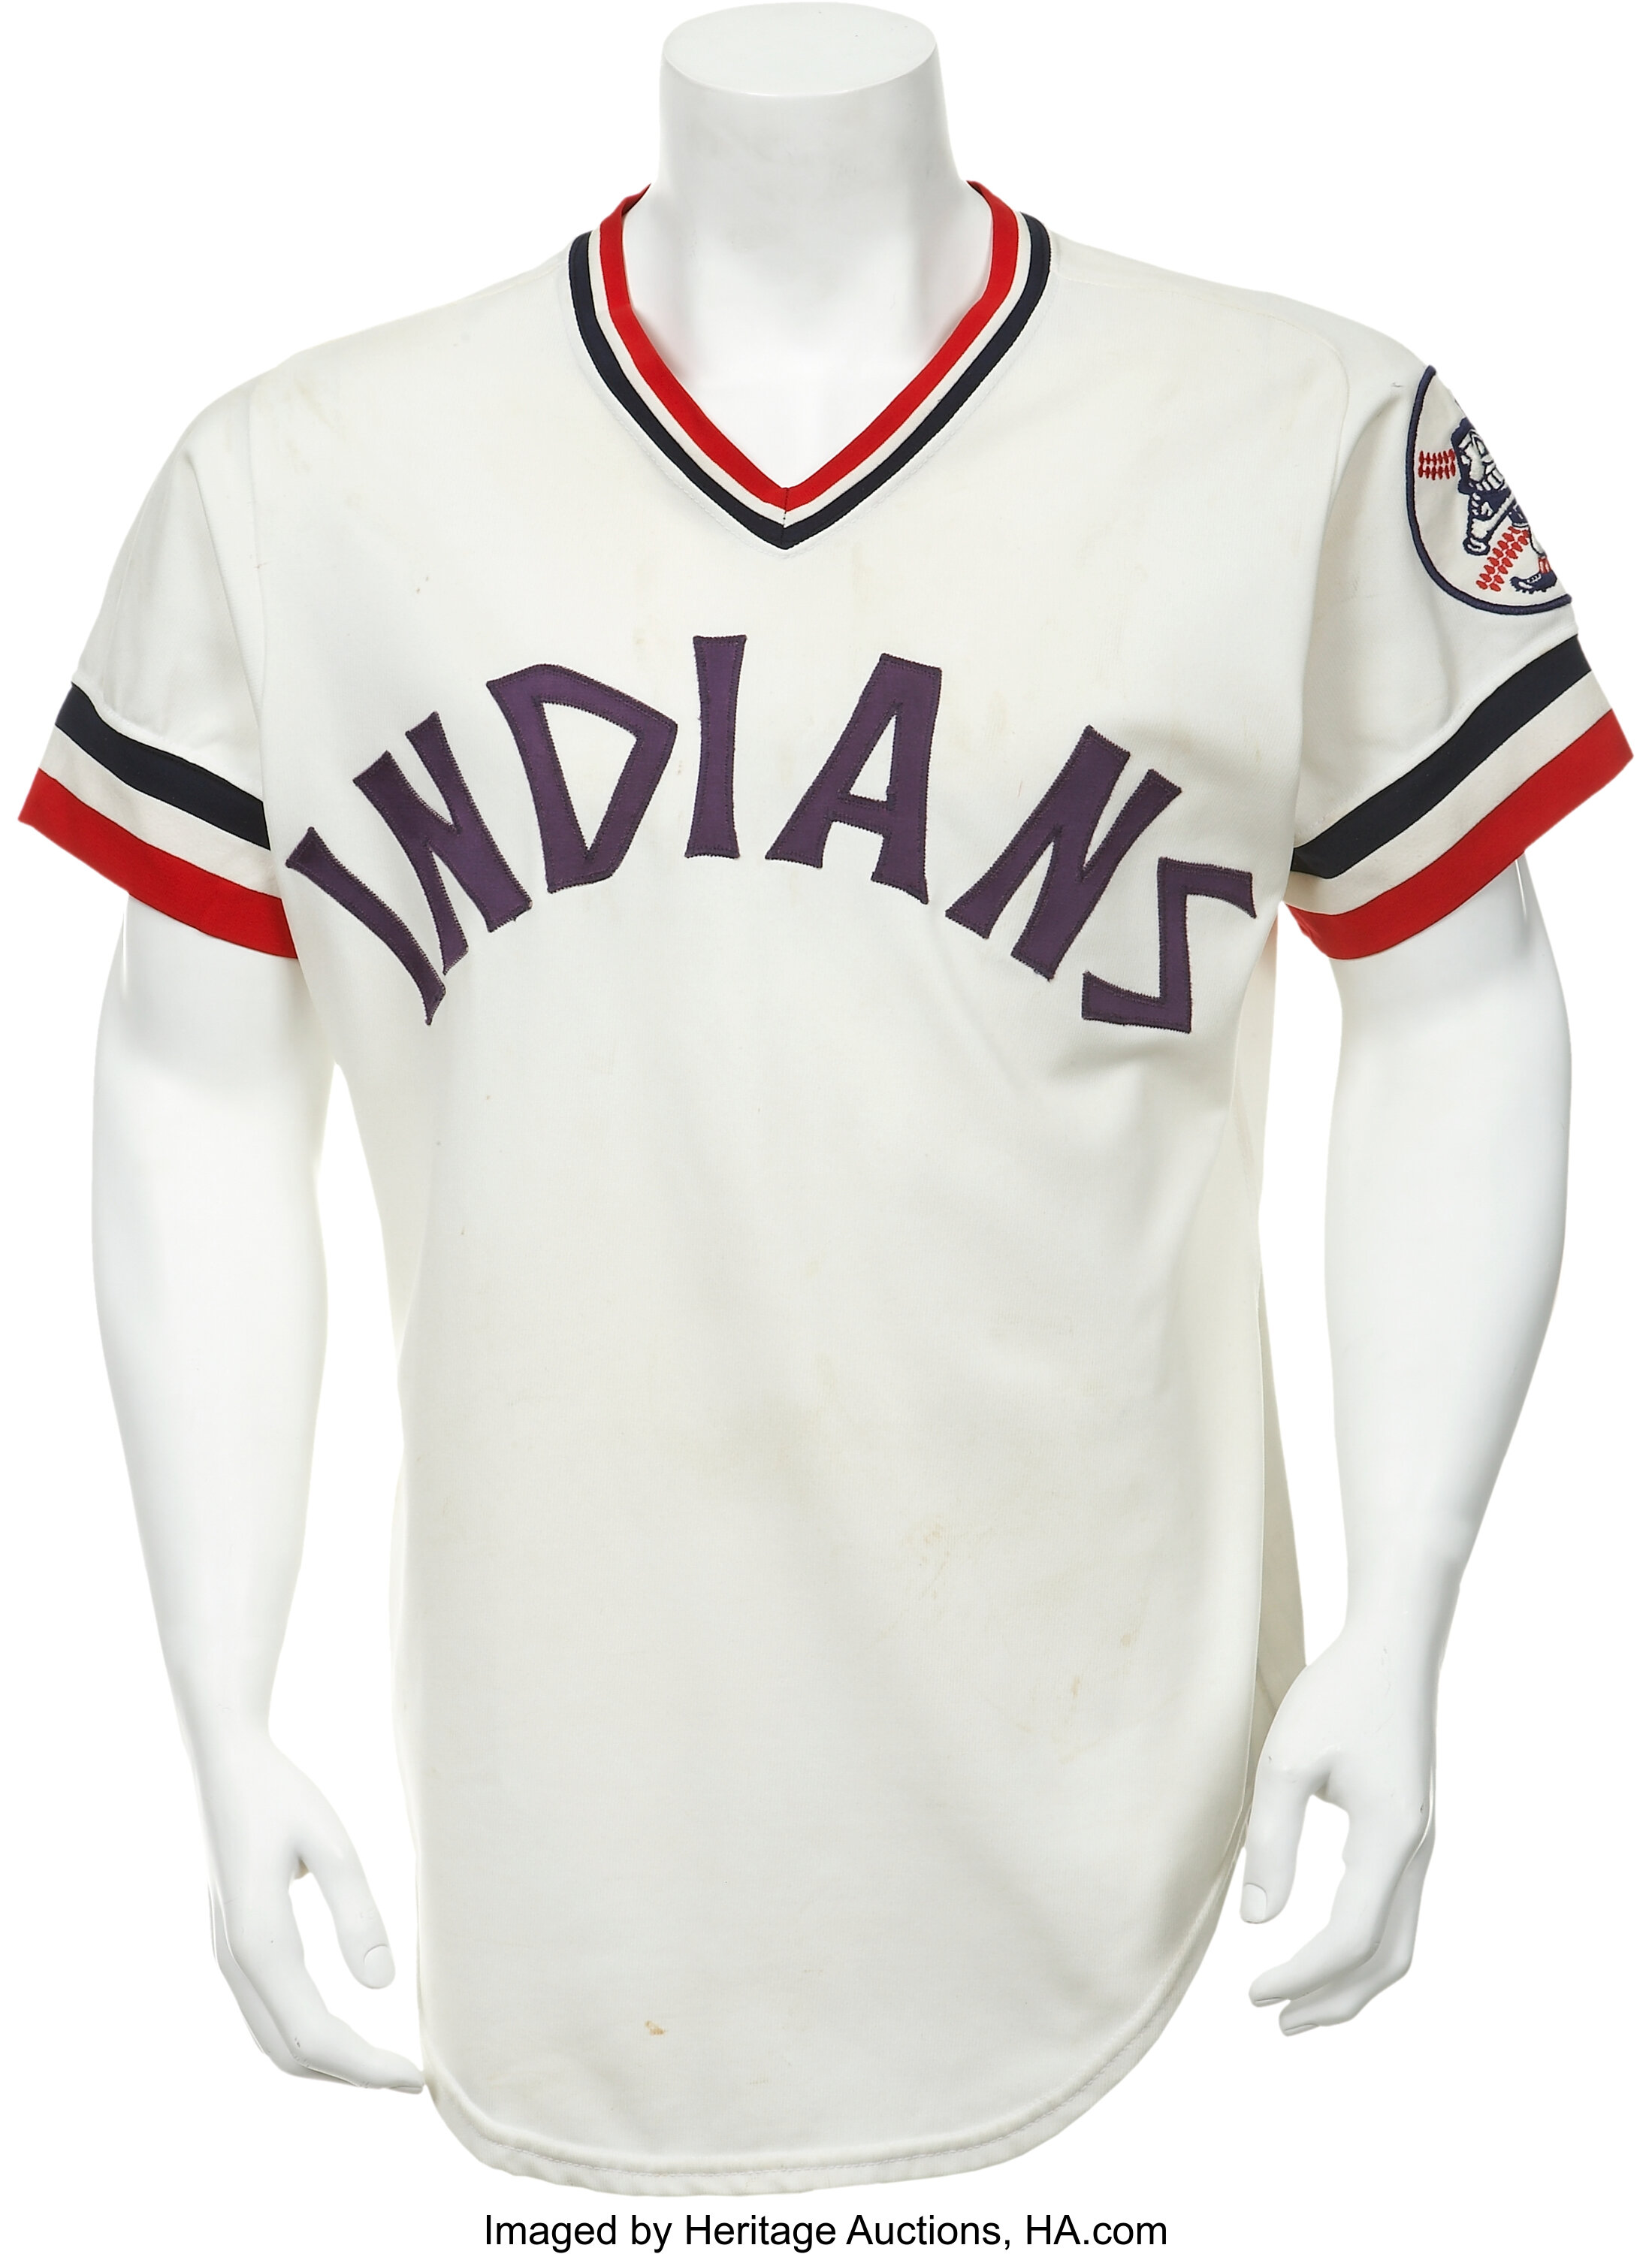 Cleveland Indians 1970 uniform artwork, This is a highly de…